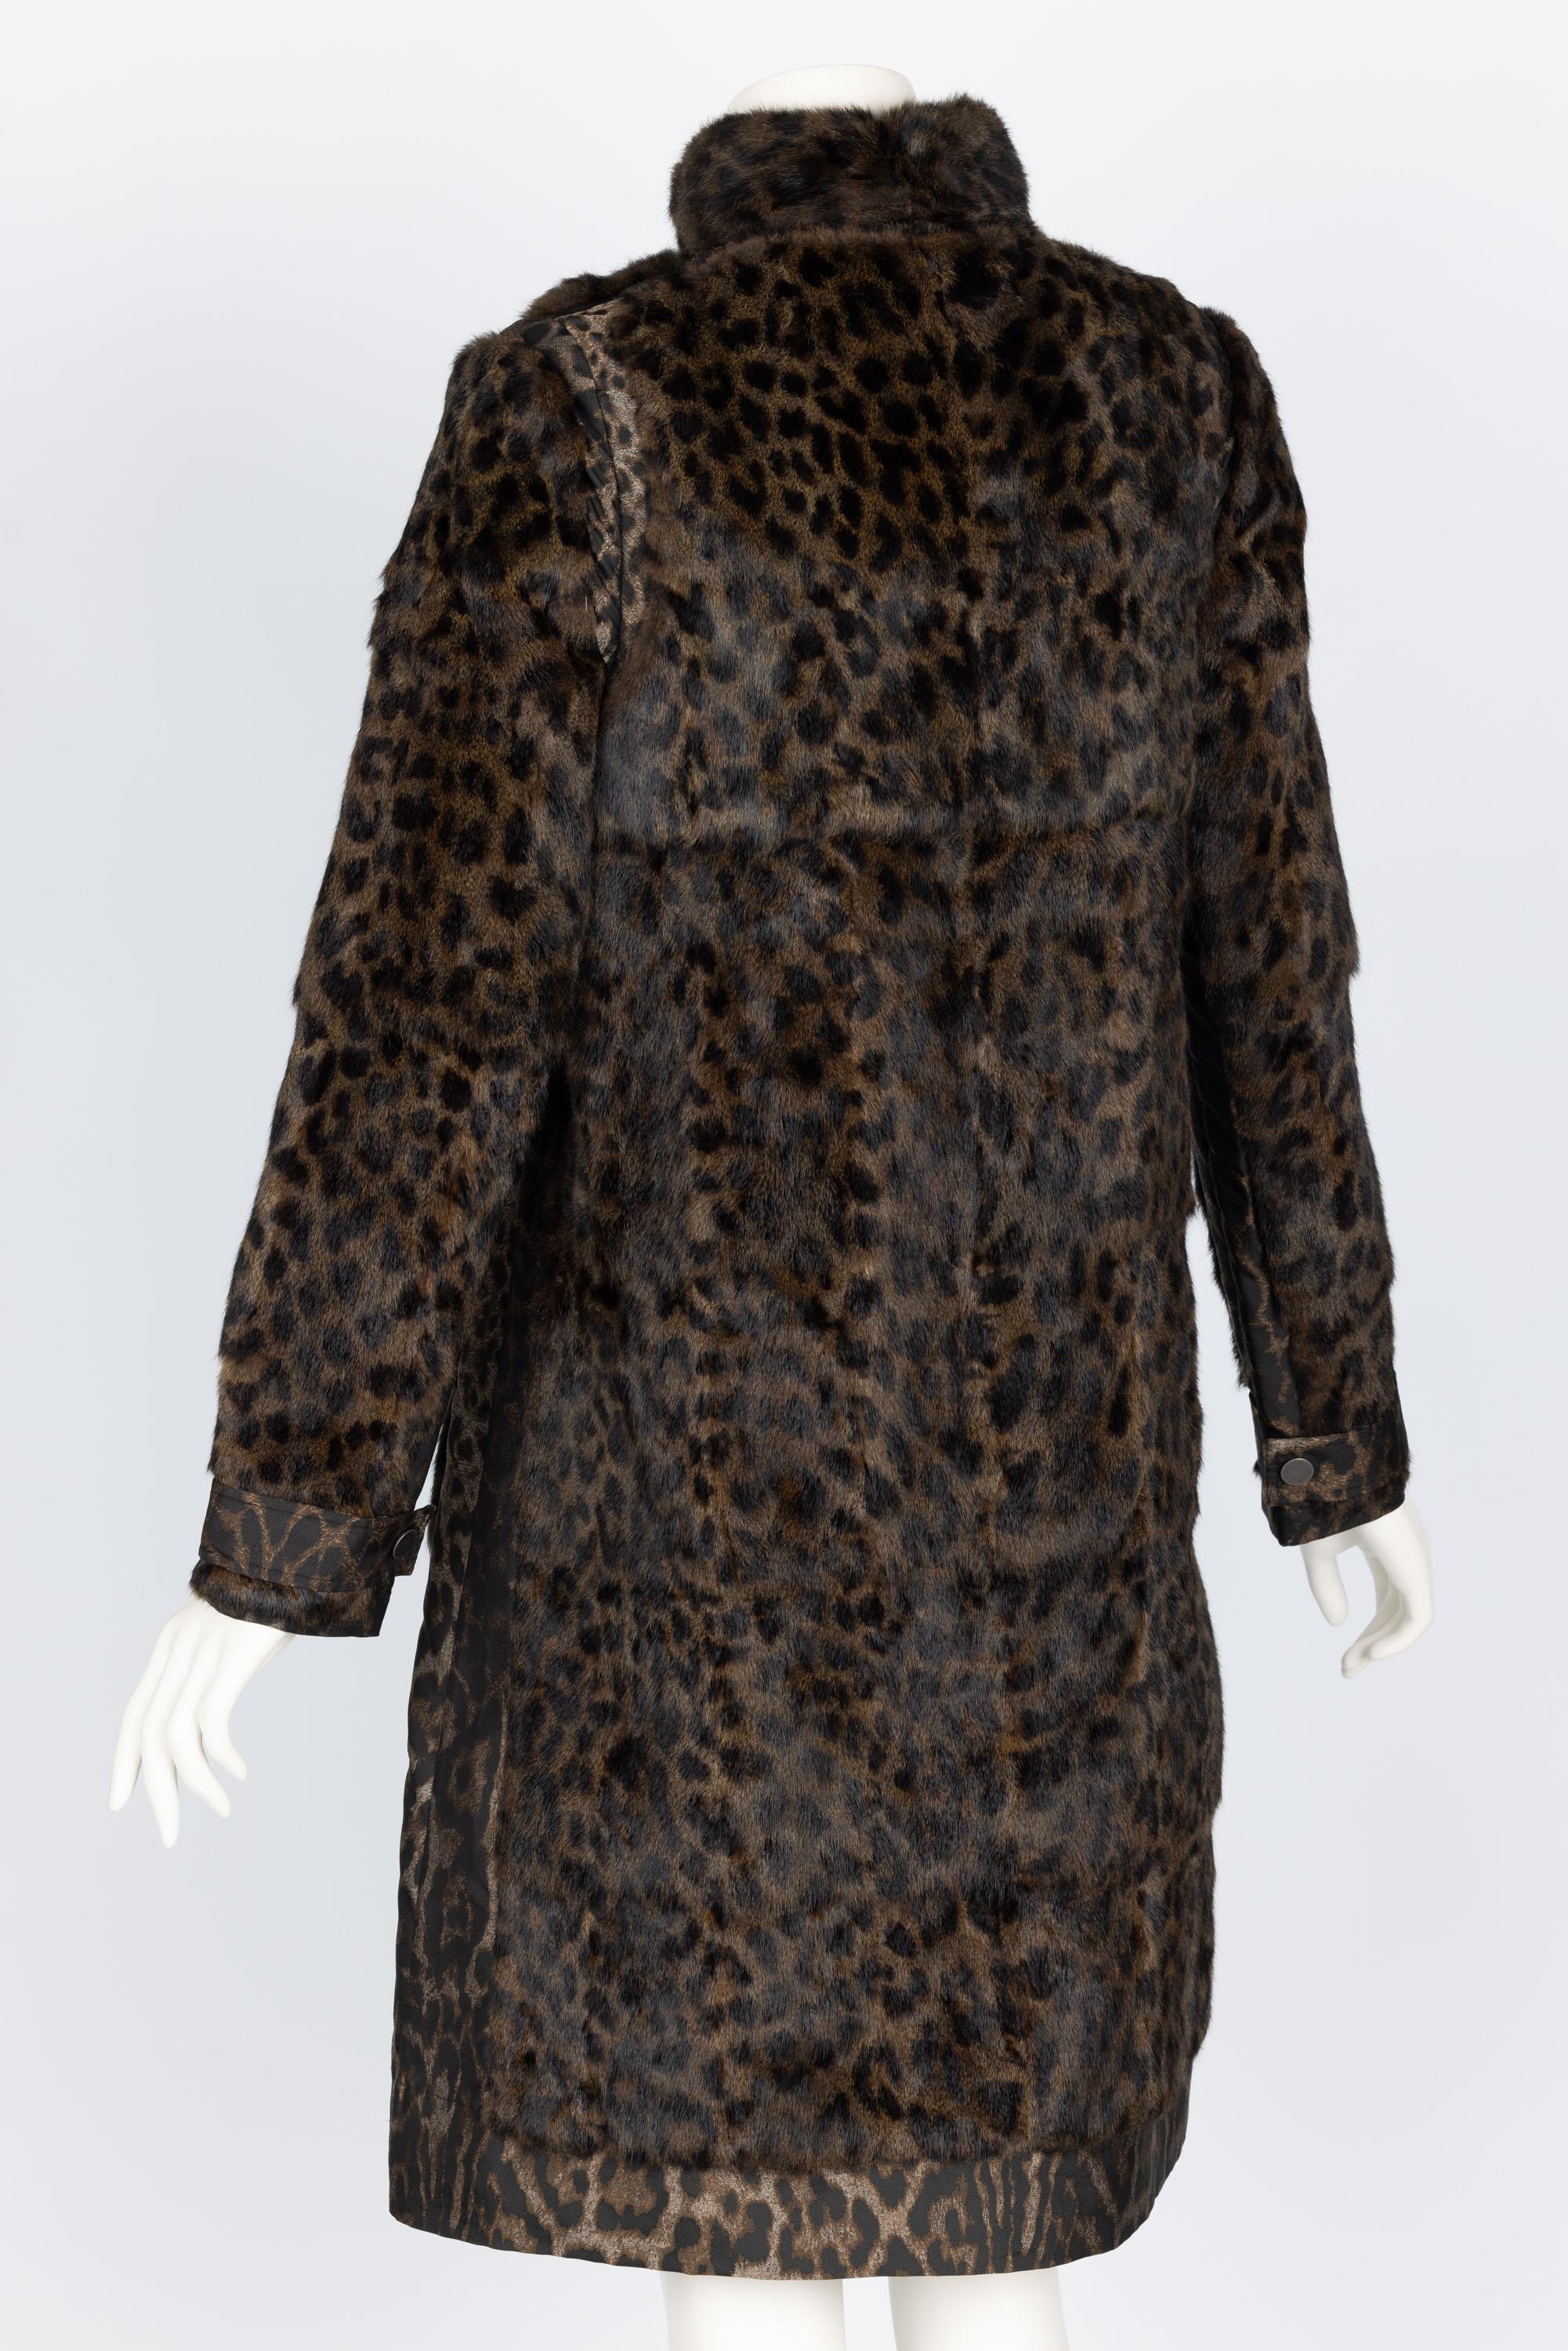 Lanvin Alber Elbaz F/W 2013 Leopard Fur & Taffeta Belted Trench Coat For Sale 3